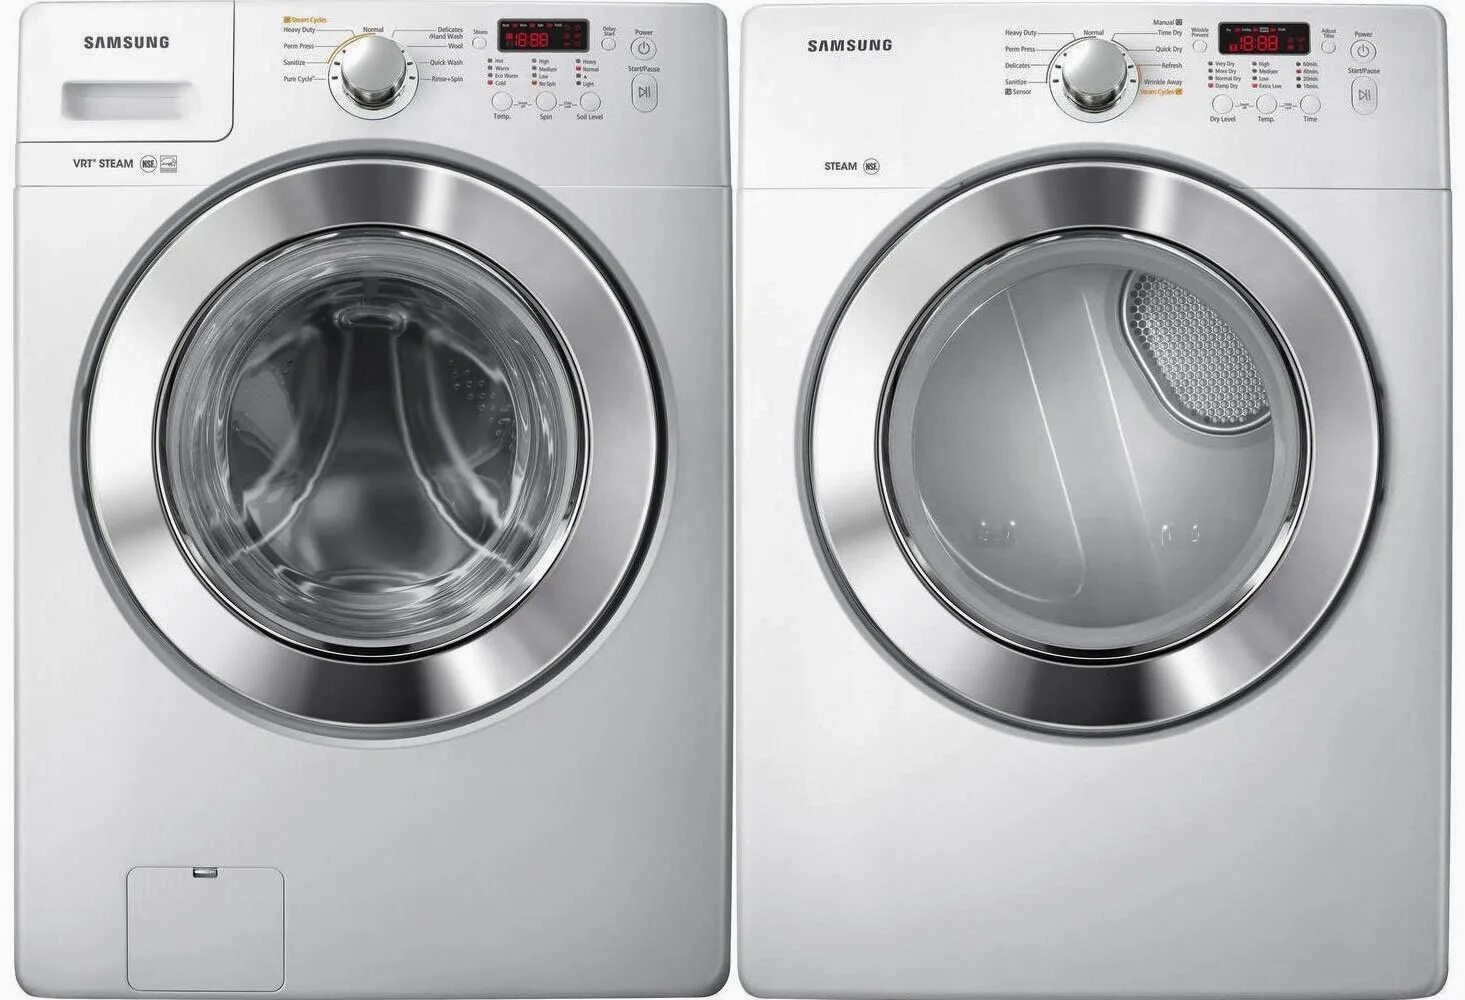 Washer. Samsung Washer Dryer. Samsung Washer & Dryer Set. Washing Machine Samsung vrt. Samsung Washer 6 Series.